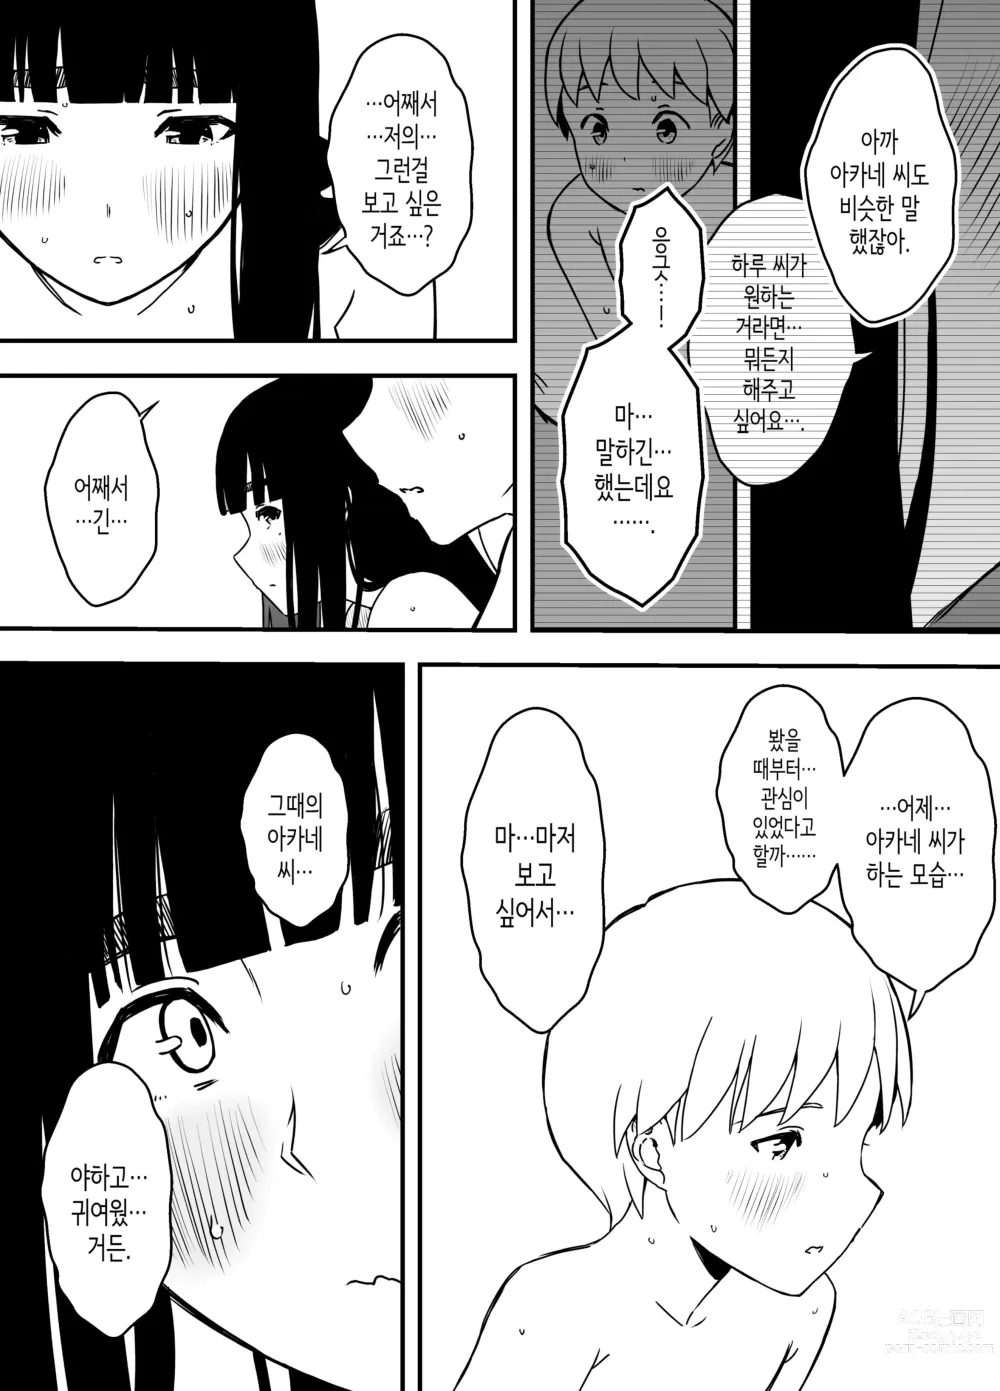 Page 6 of doujinshi 의붓 누나와의 7일간 생활 5